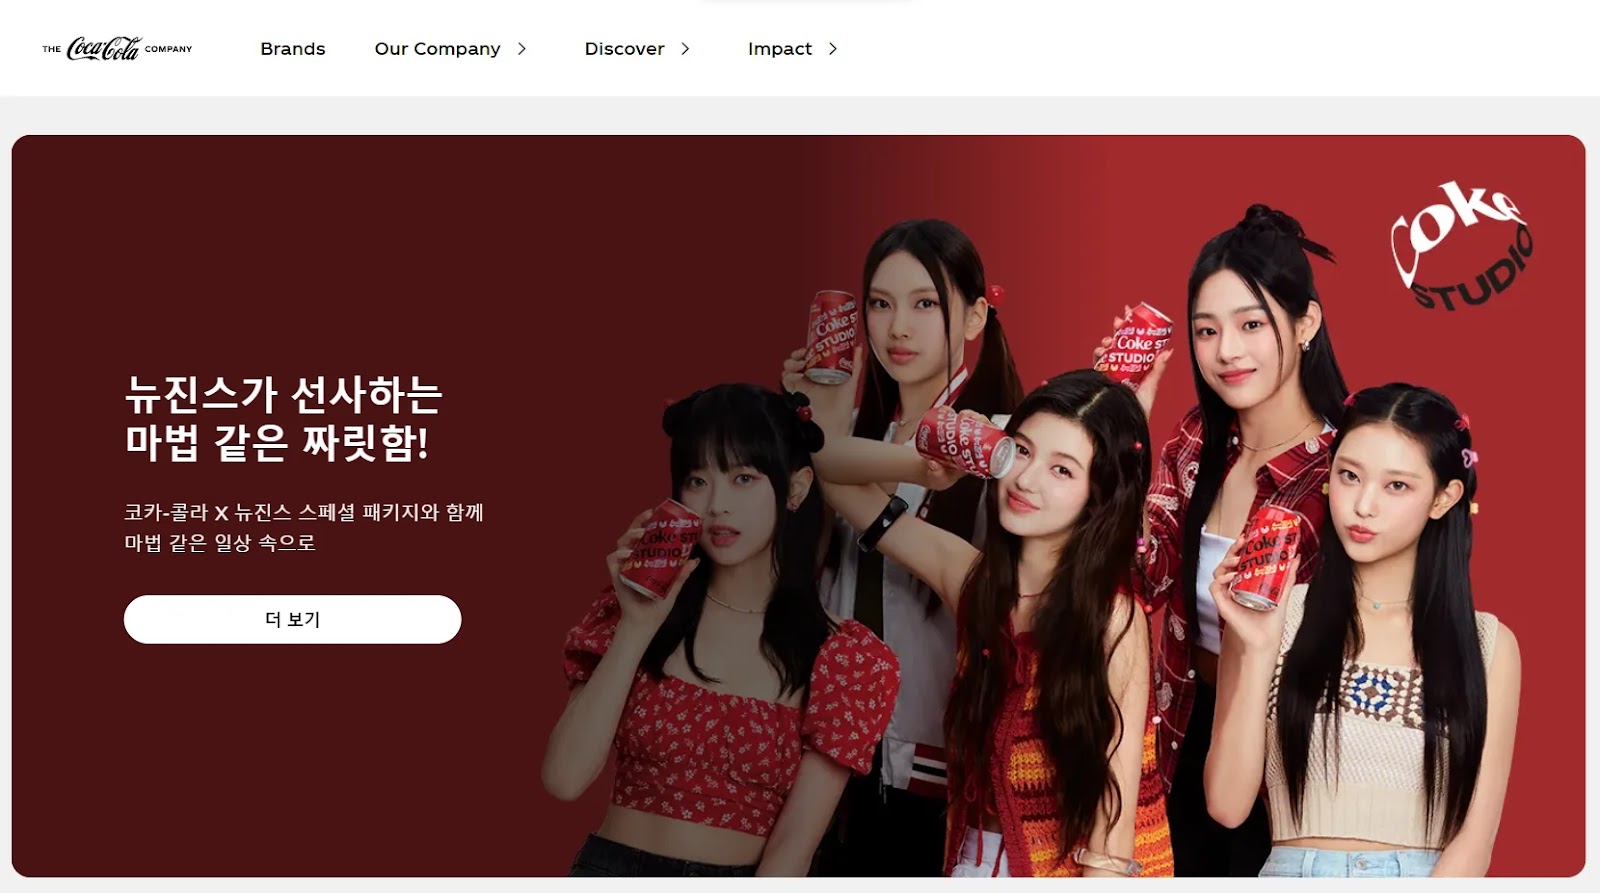 Coca-Cola’s homepage in South Korea